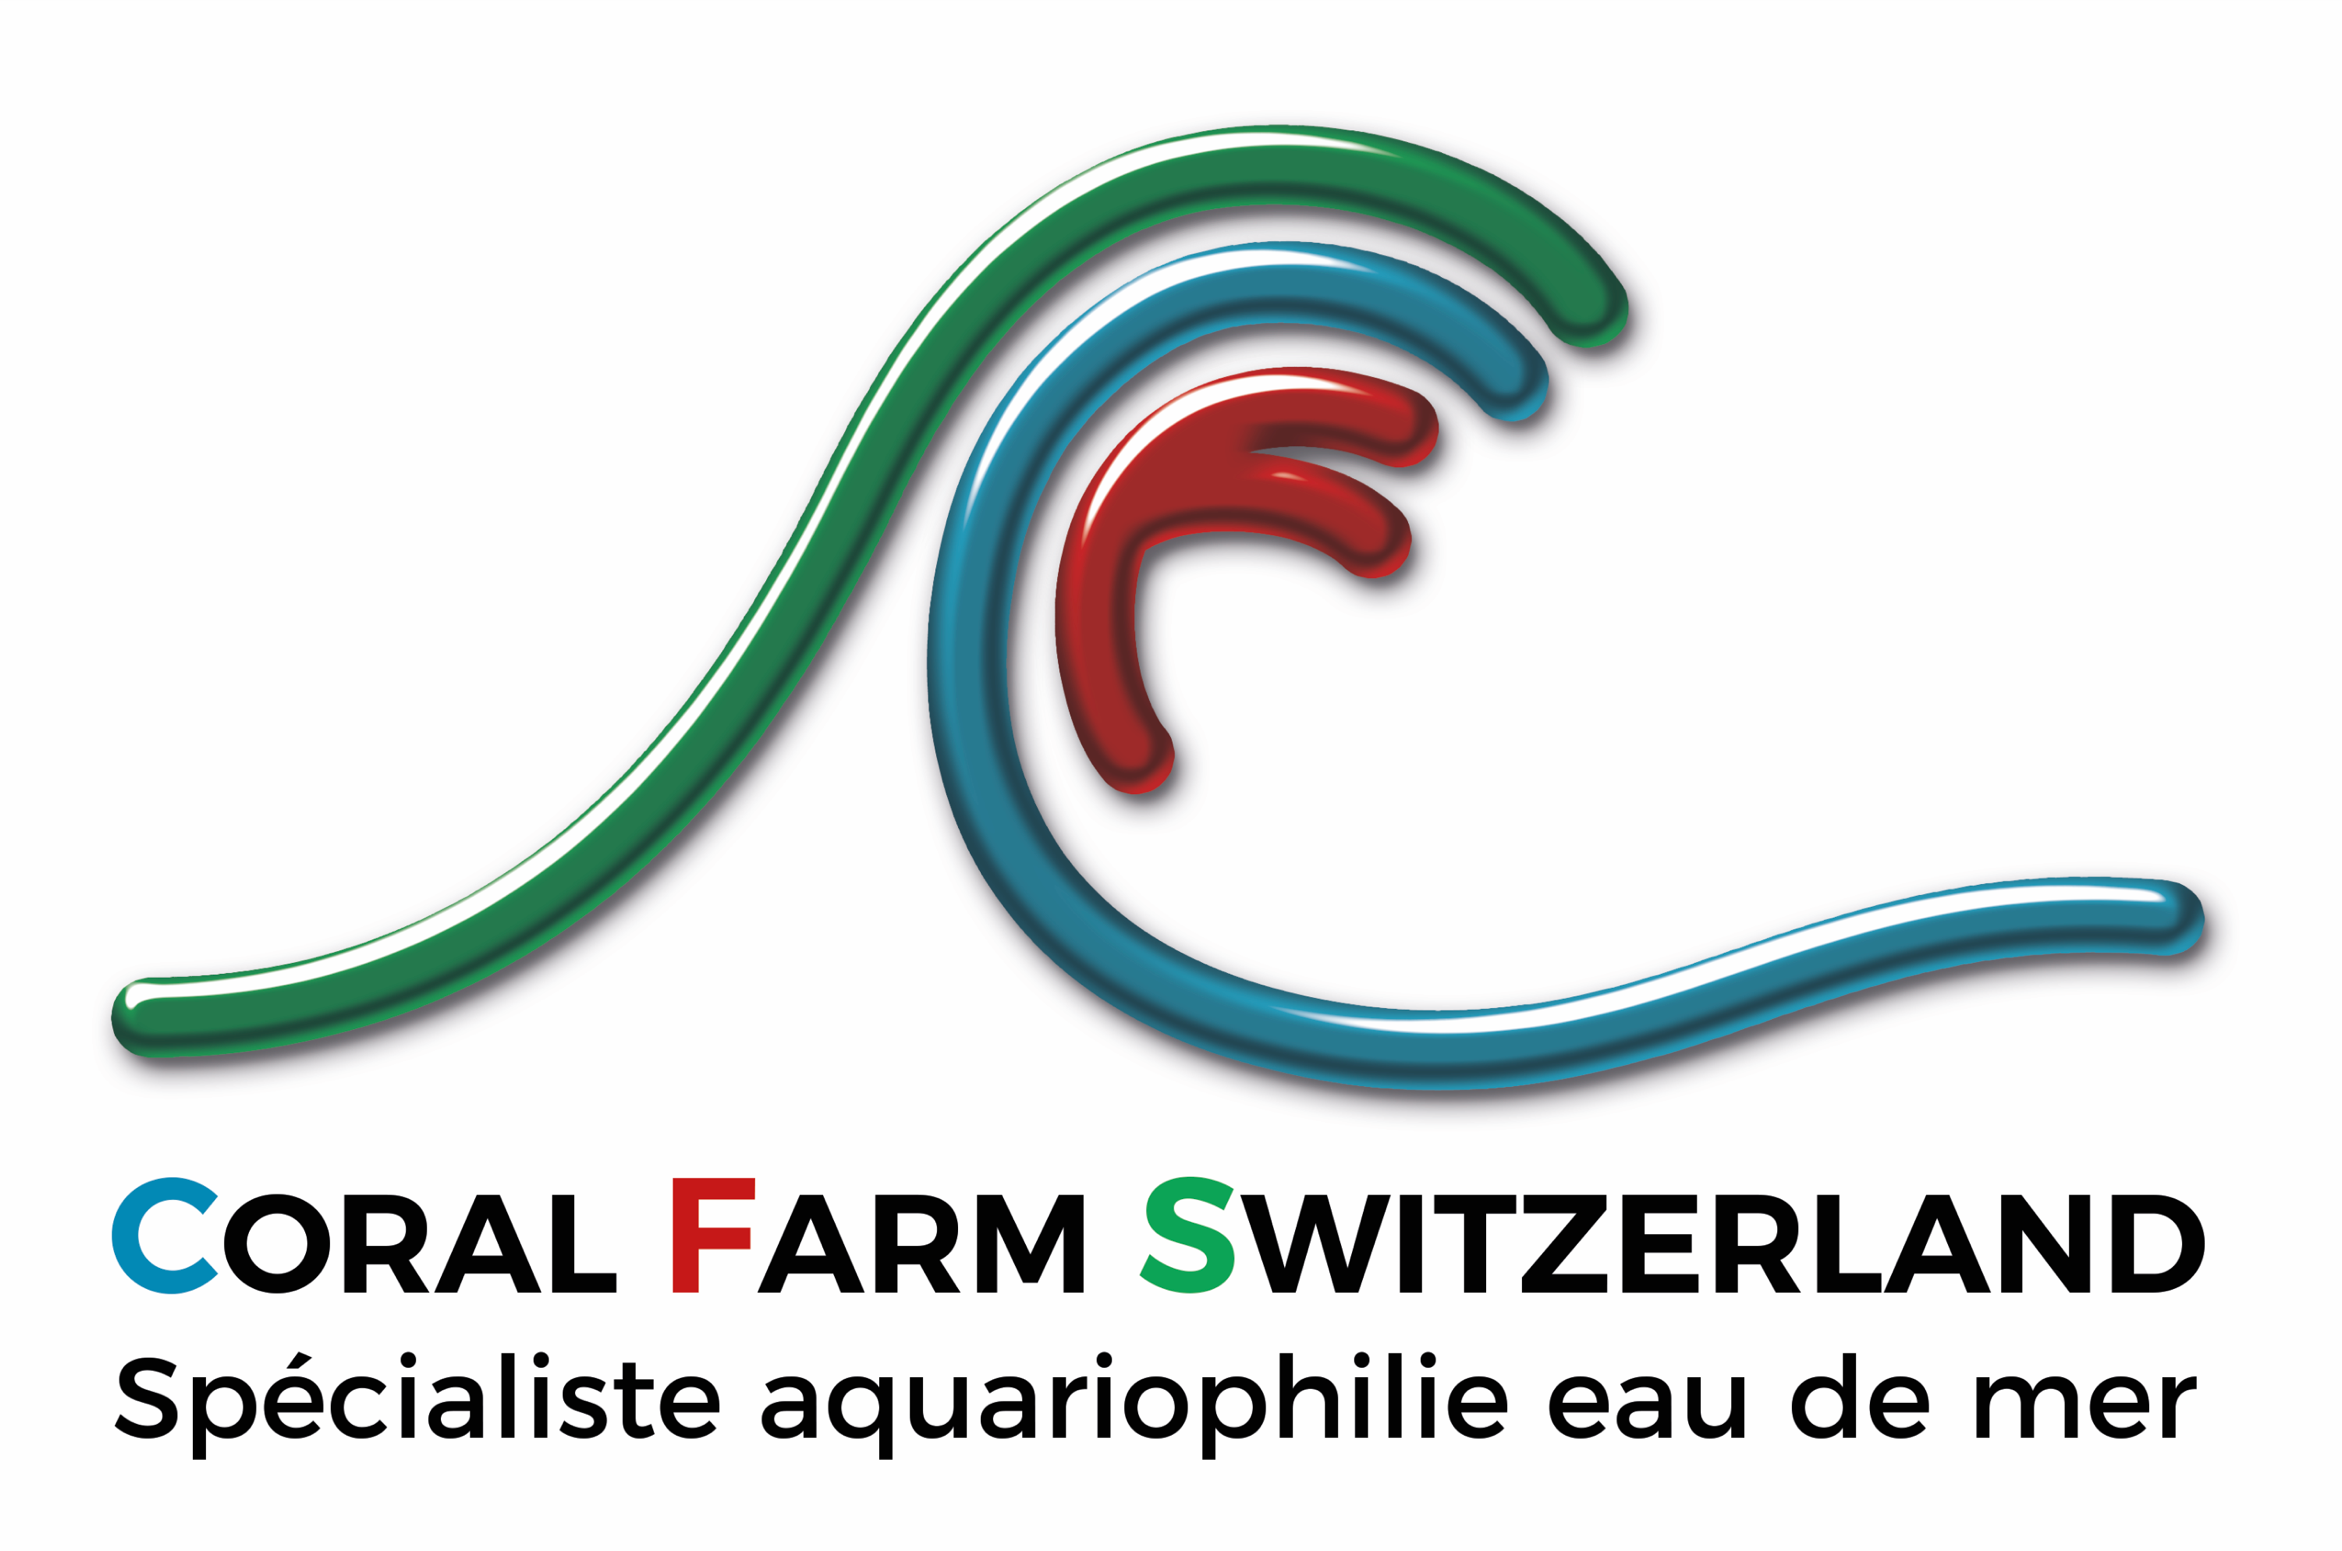 Coral Farm Switzerland